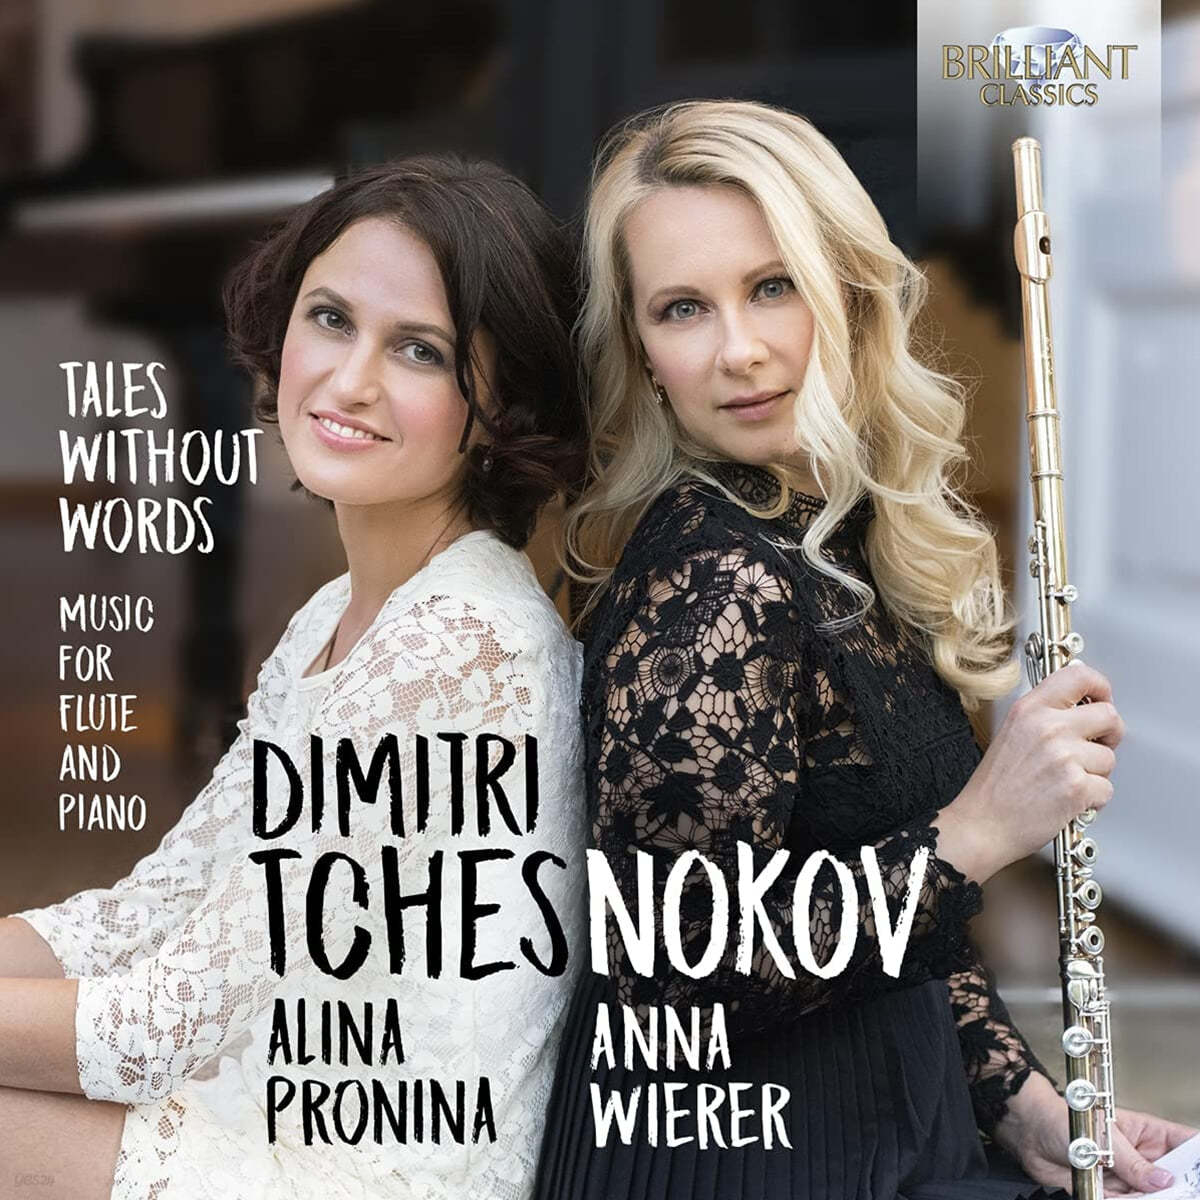 Anna Wierer / Alina Pronina 체스노코프: 플루트와 피아노를 위한 작품 (Tchesnokov: Tales Without Words - Music for Flute and Piano) 